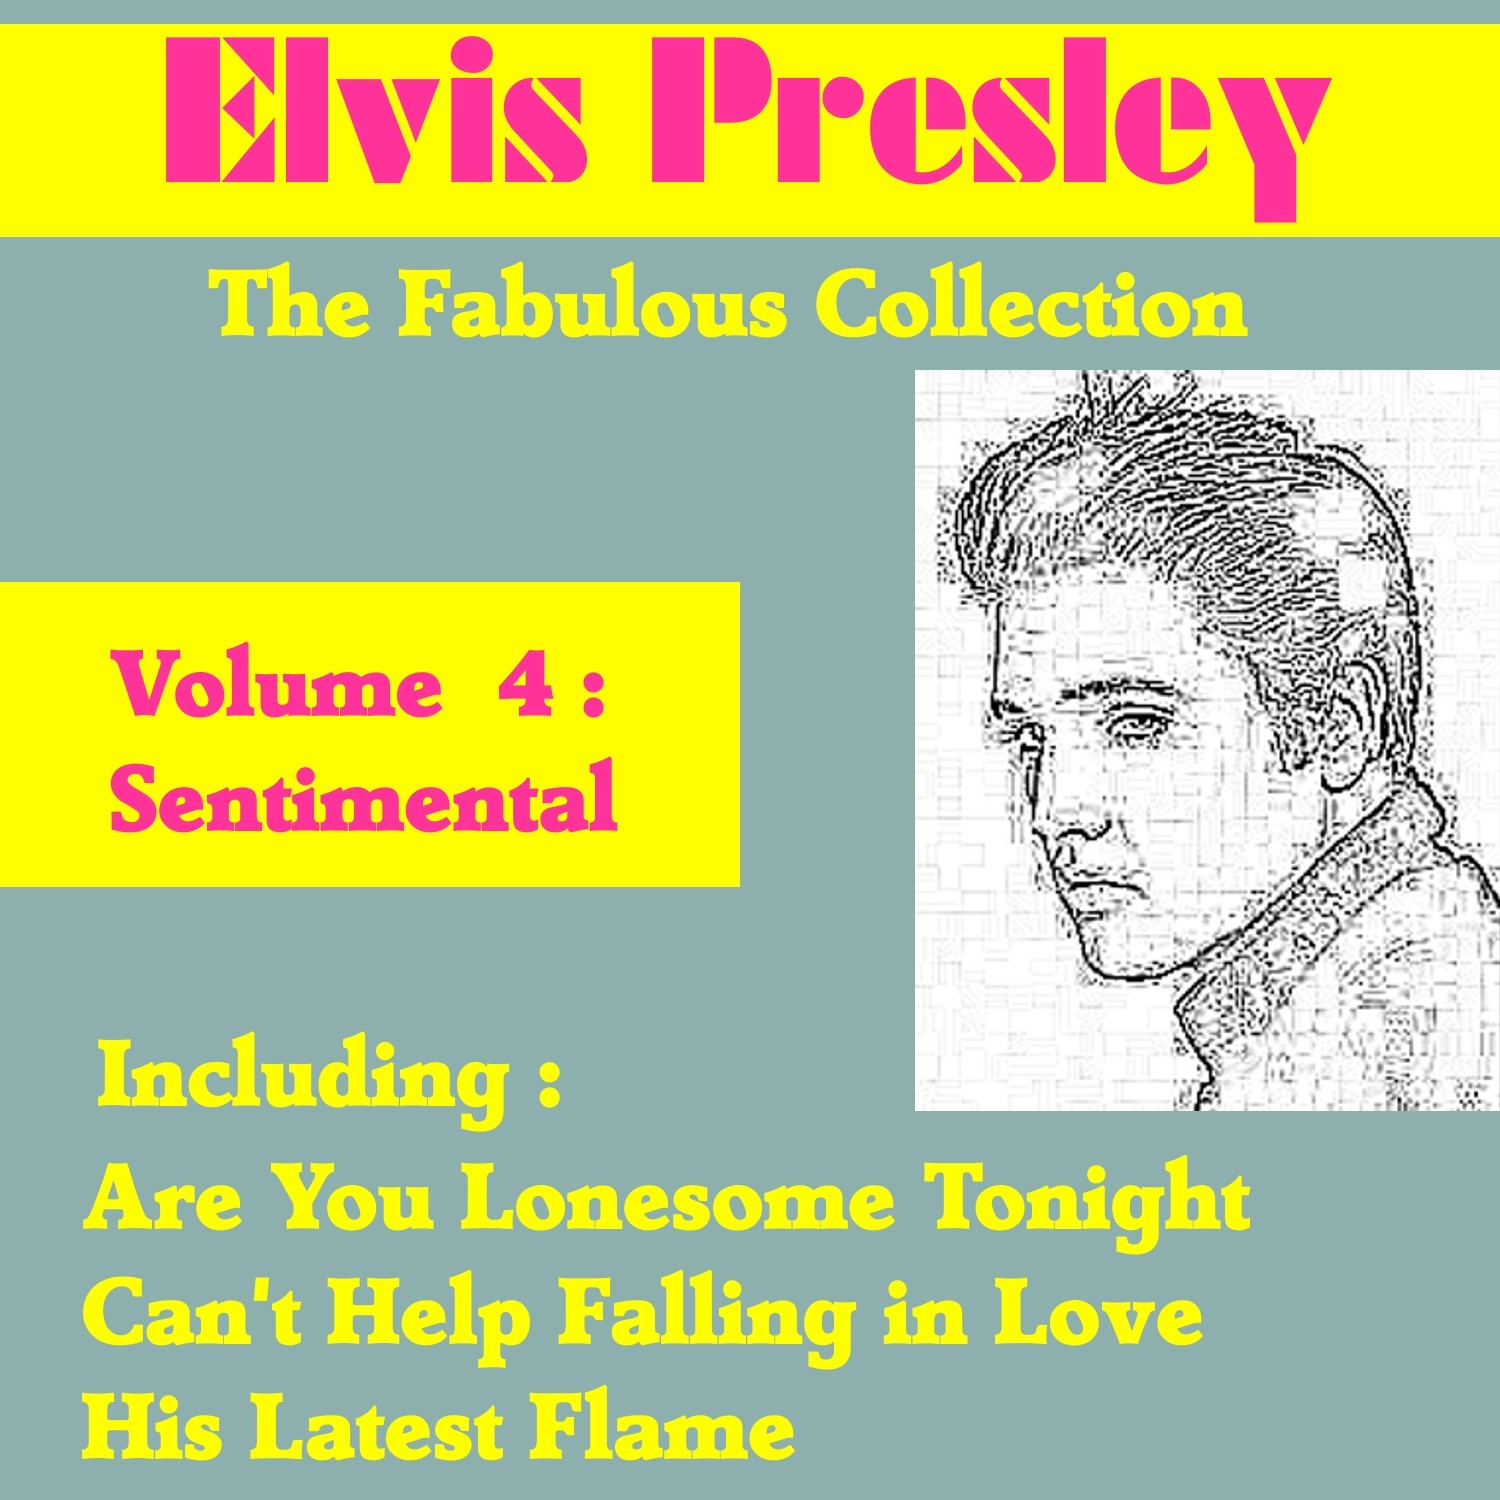 Elvis Presley the Fabulous Collection, Vol. 4 - Sentimental